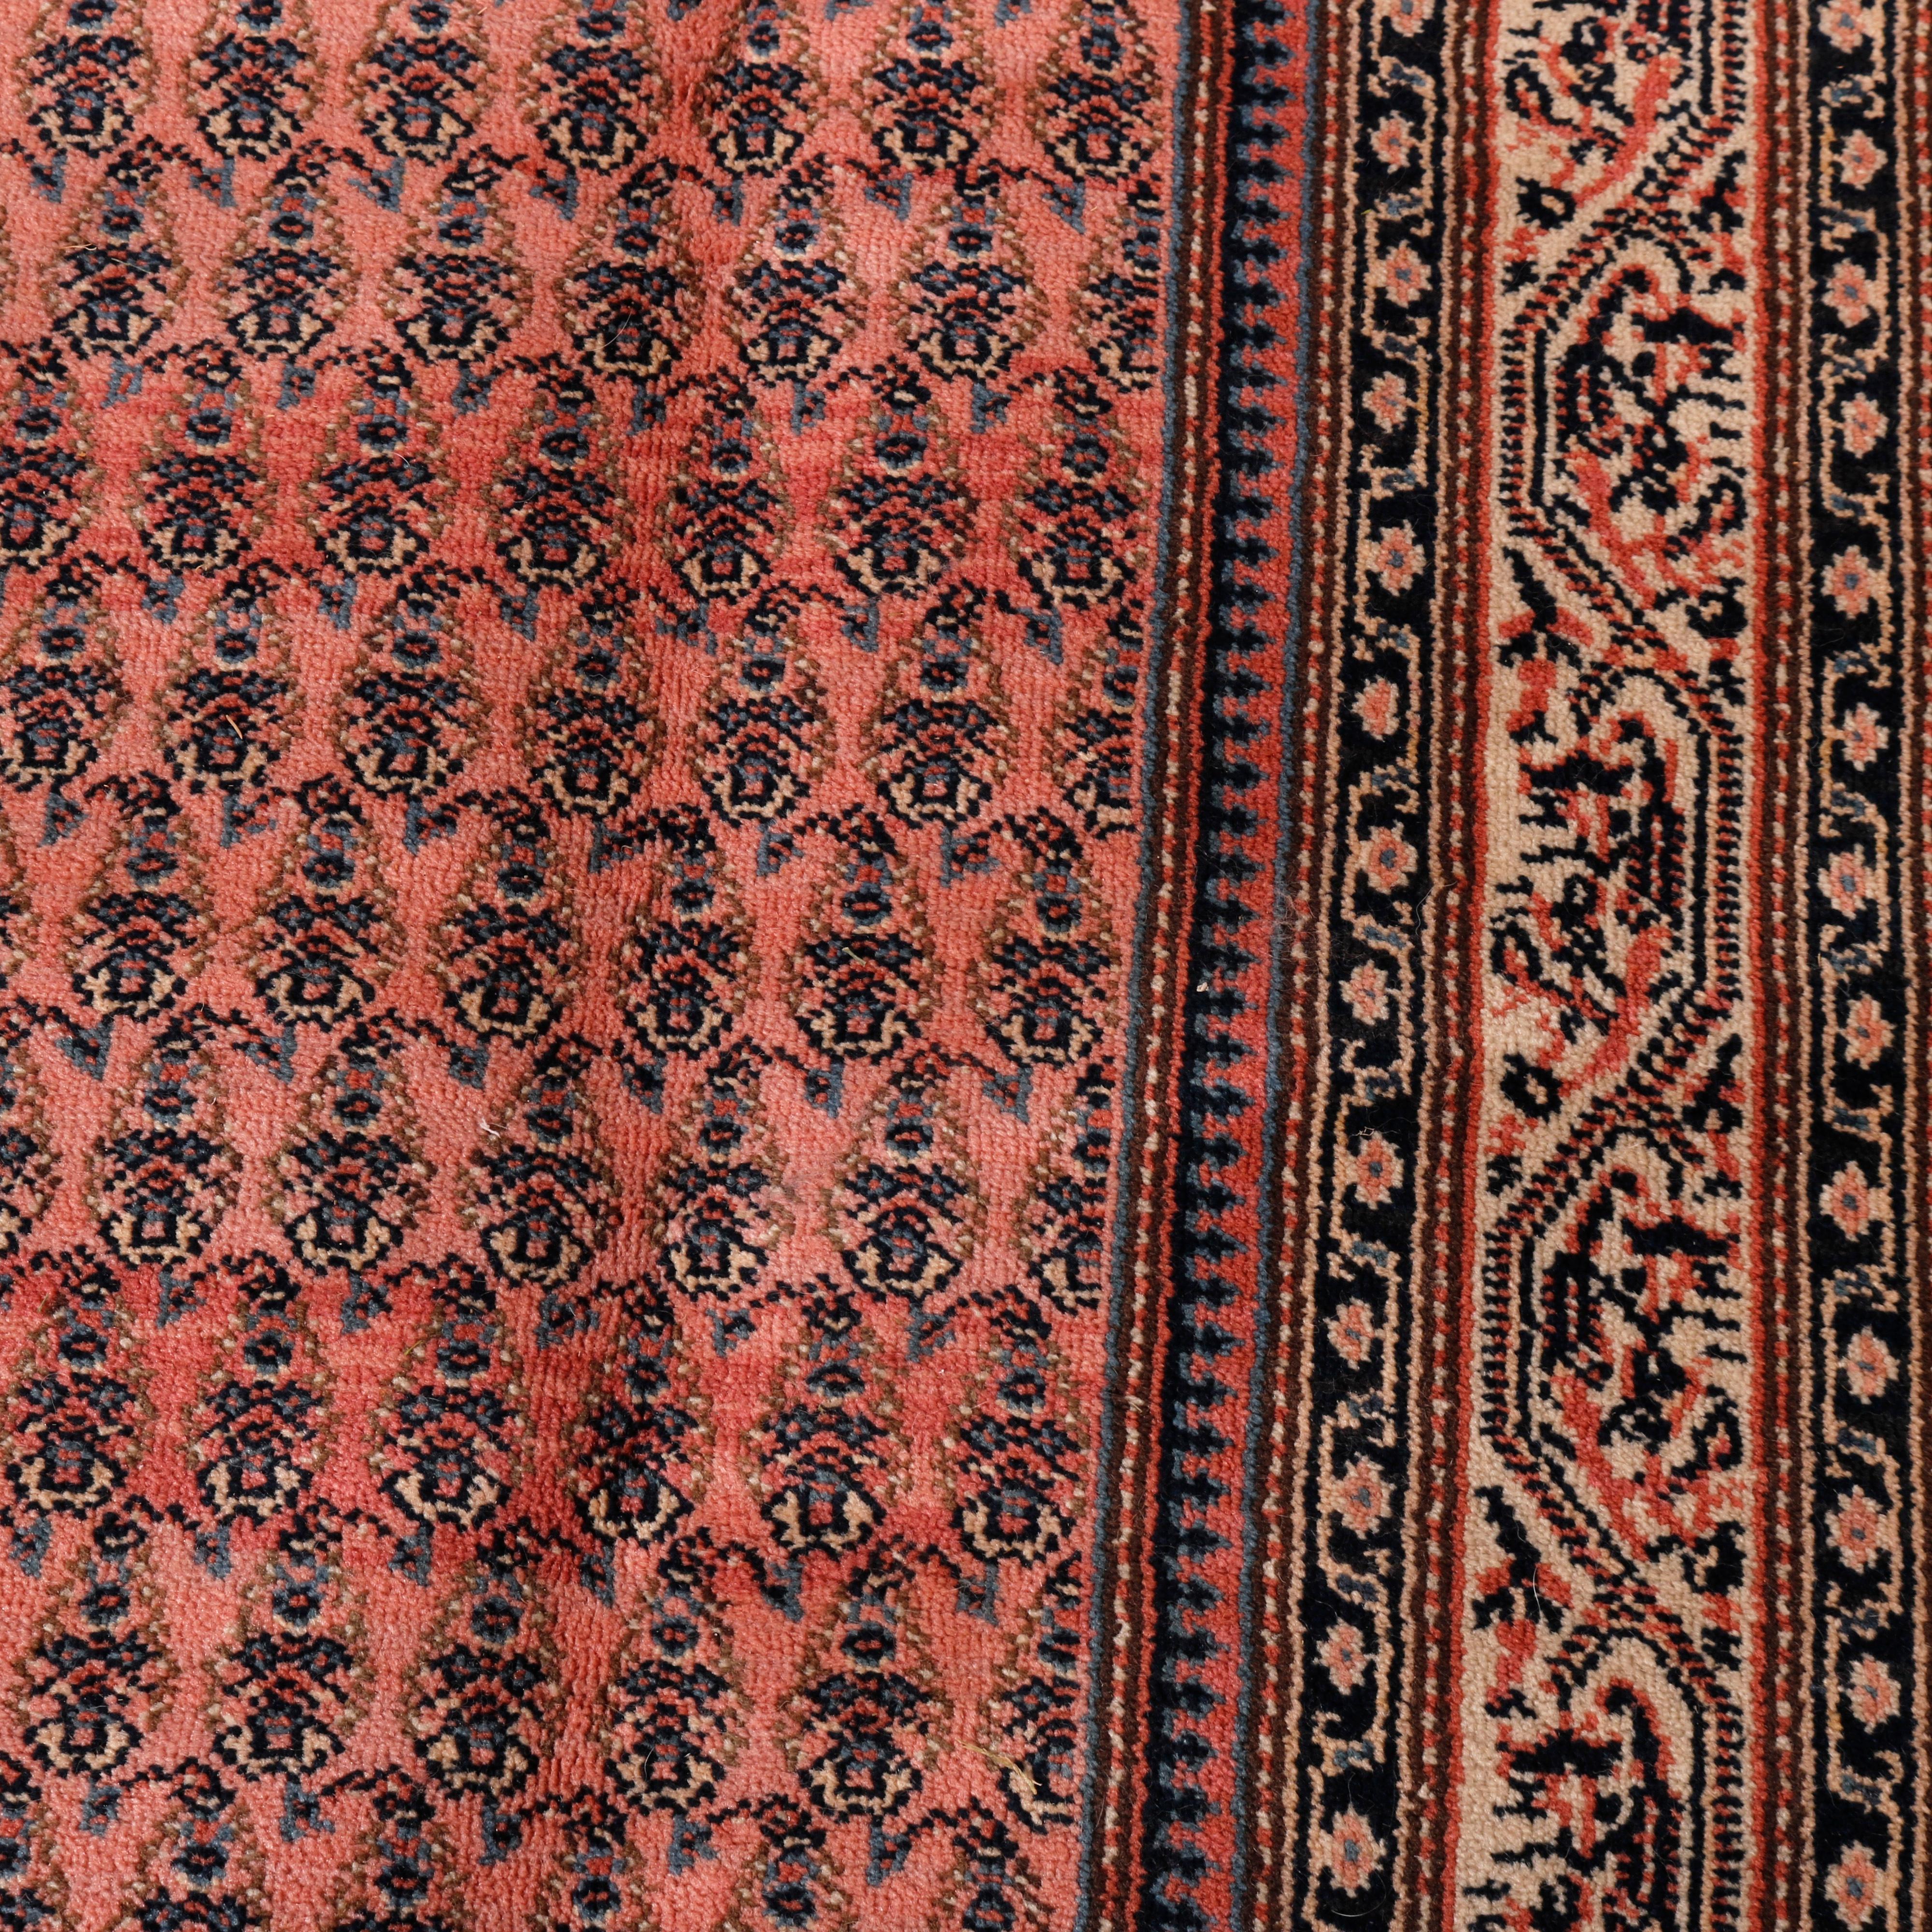 American Karastan Mir Serabend Room Size Oriental Rug Design 570/0529, Circa 1940